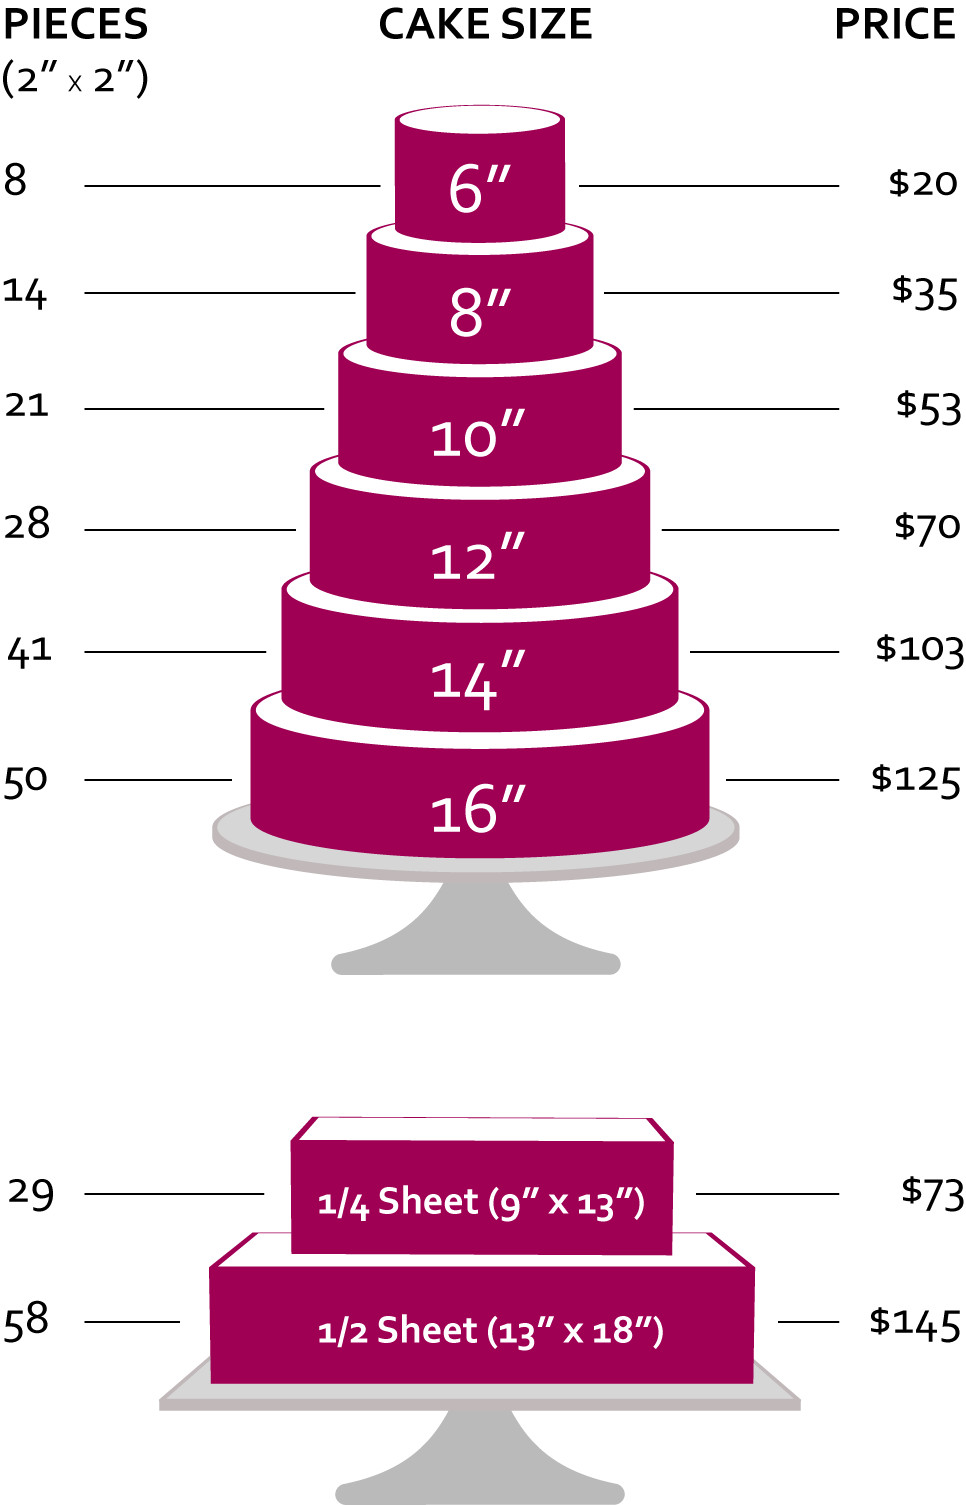 3 Tier Wedding Cakes Sizes
 4 tier wedding cake sizes idea in 2017